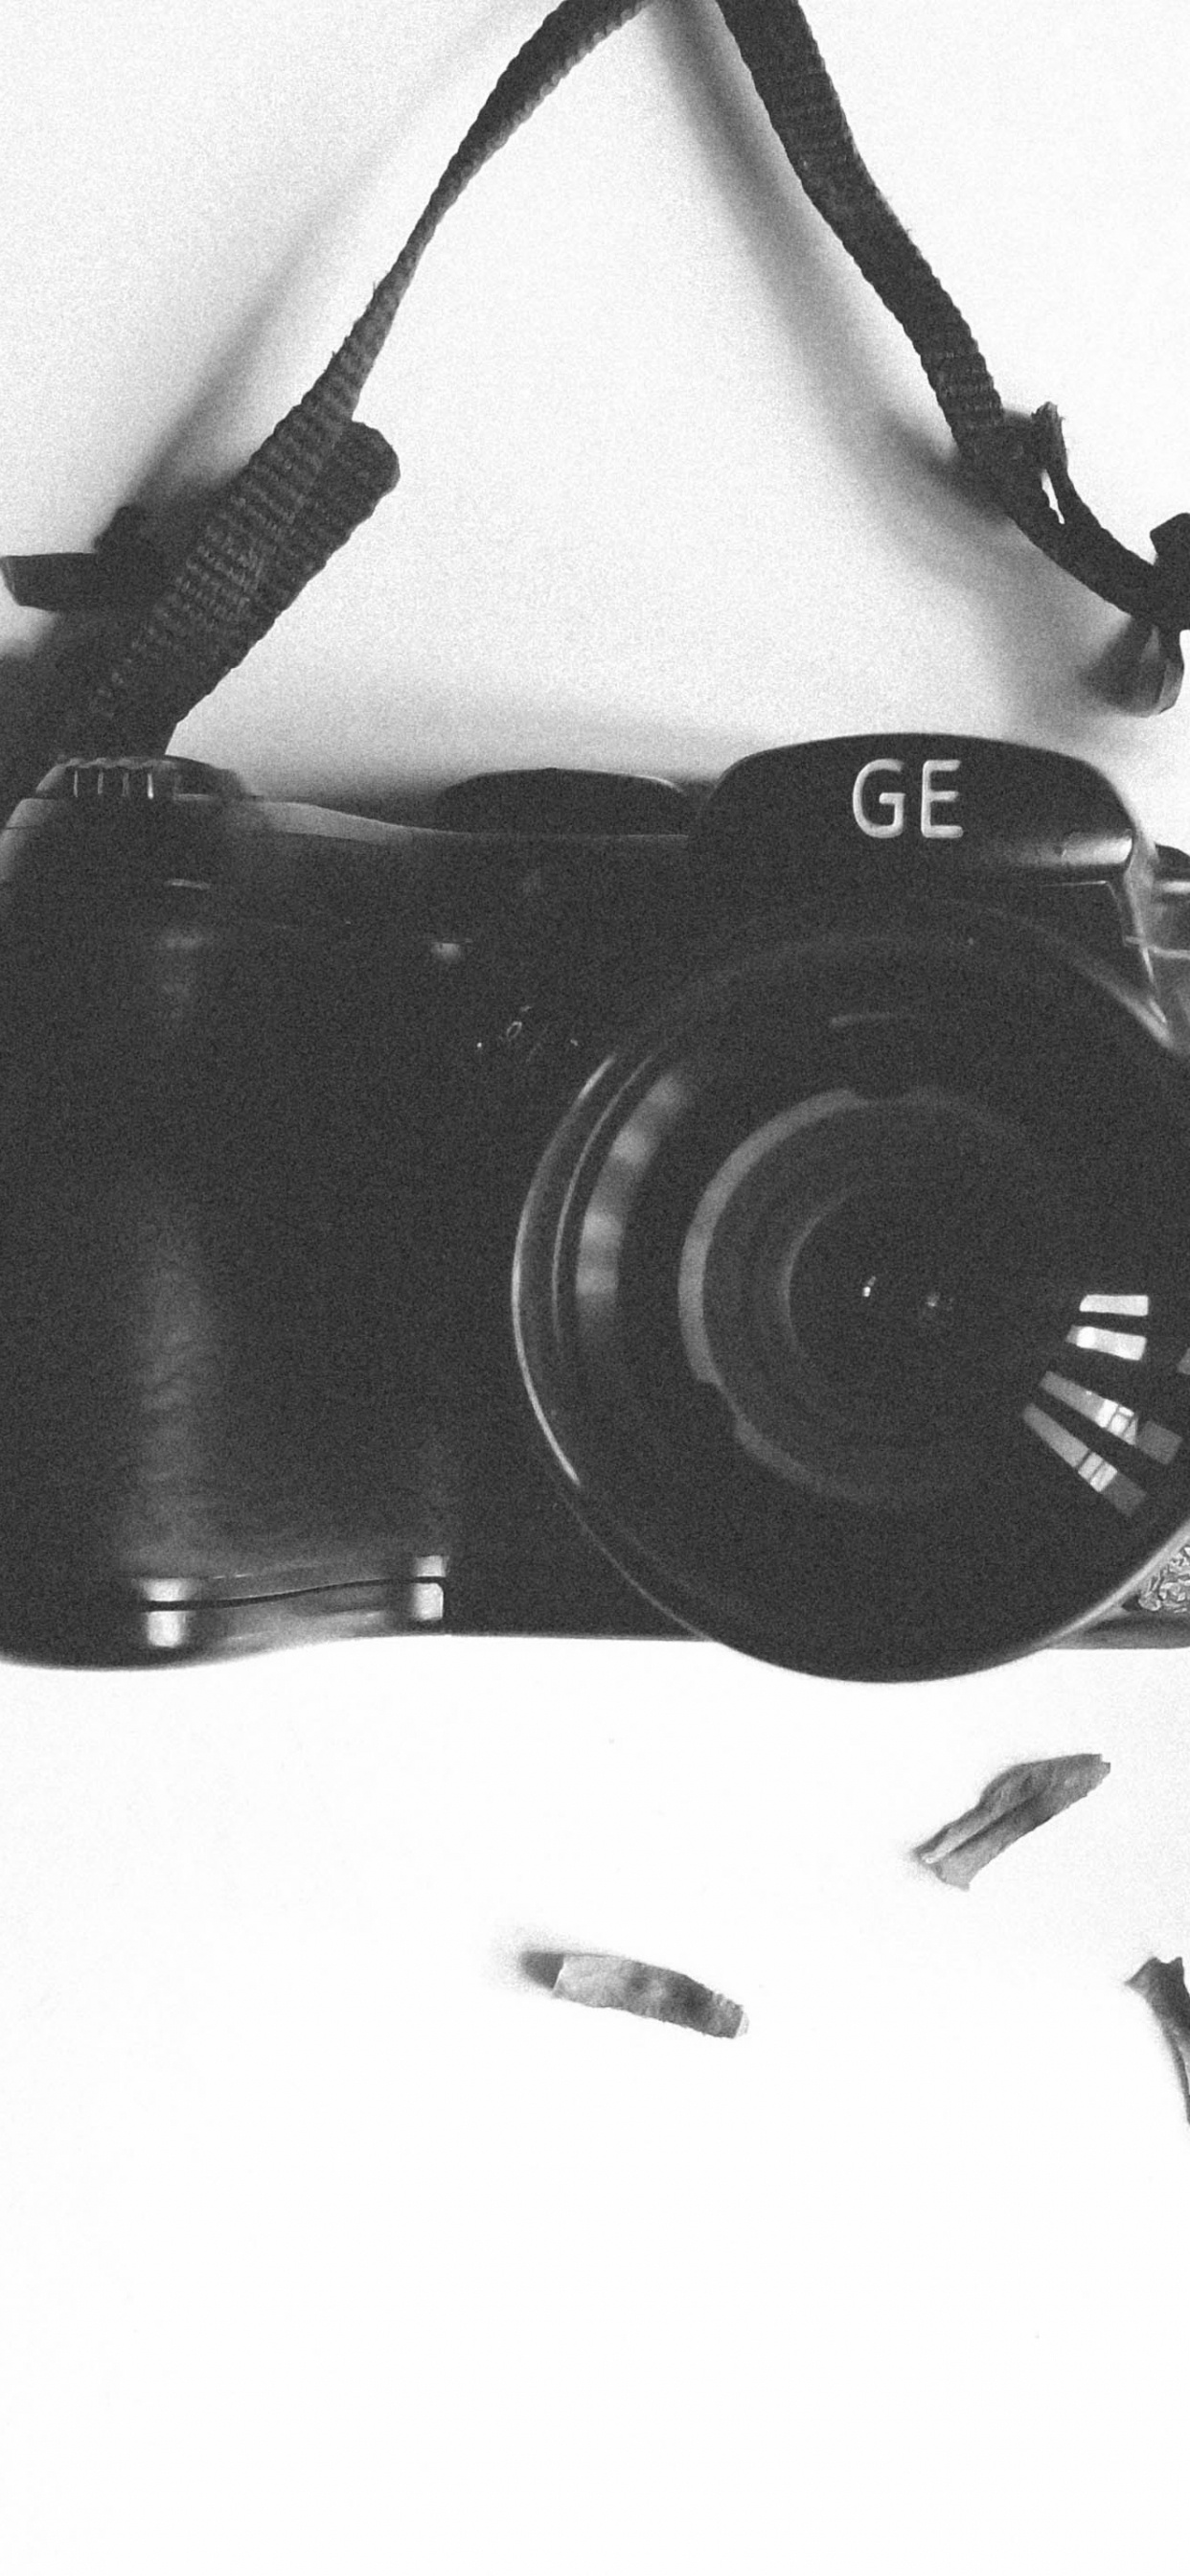 Black Nikon Dslr Camera on White Textile. Wallpaper in 1242x2688 Resolution